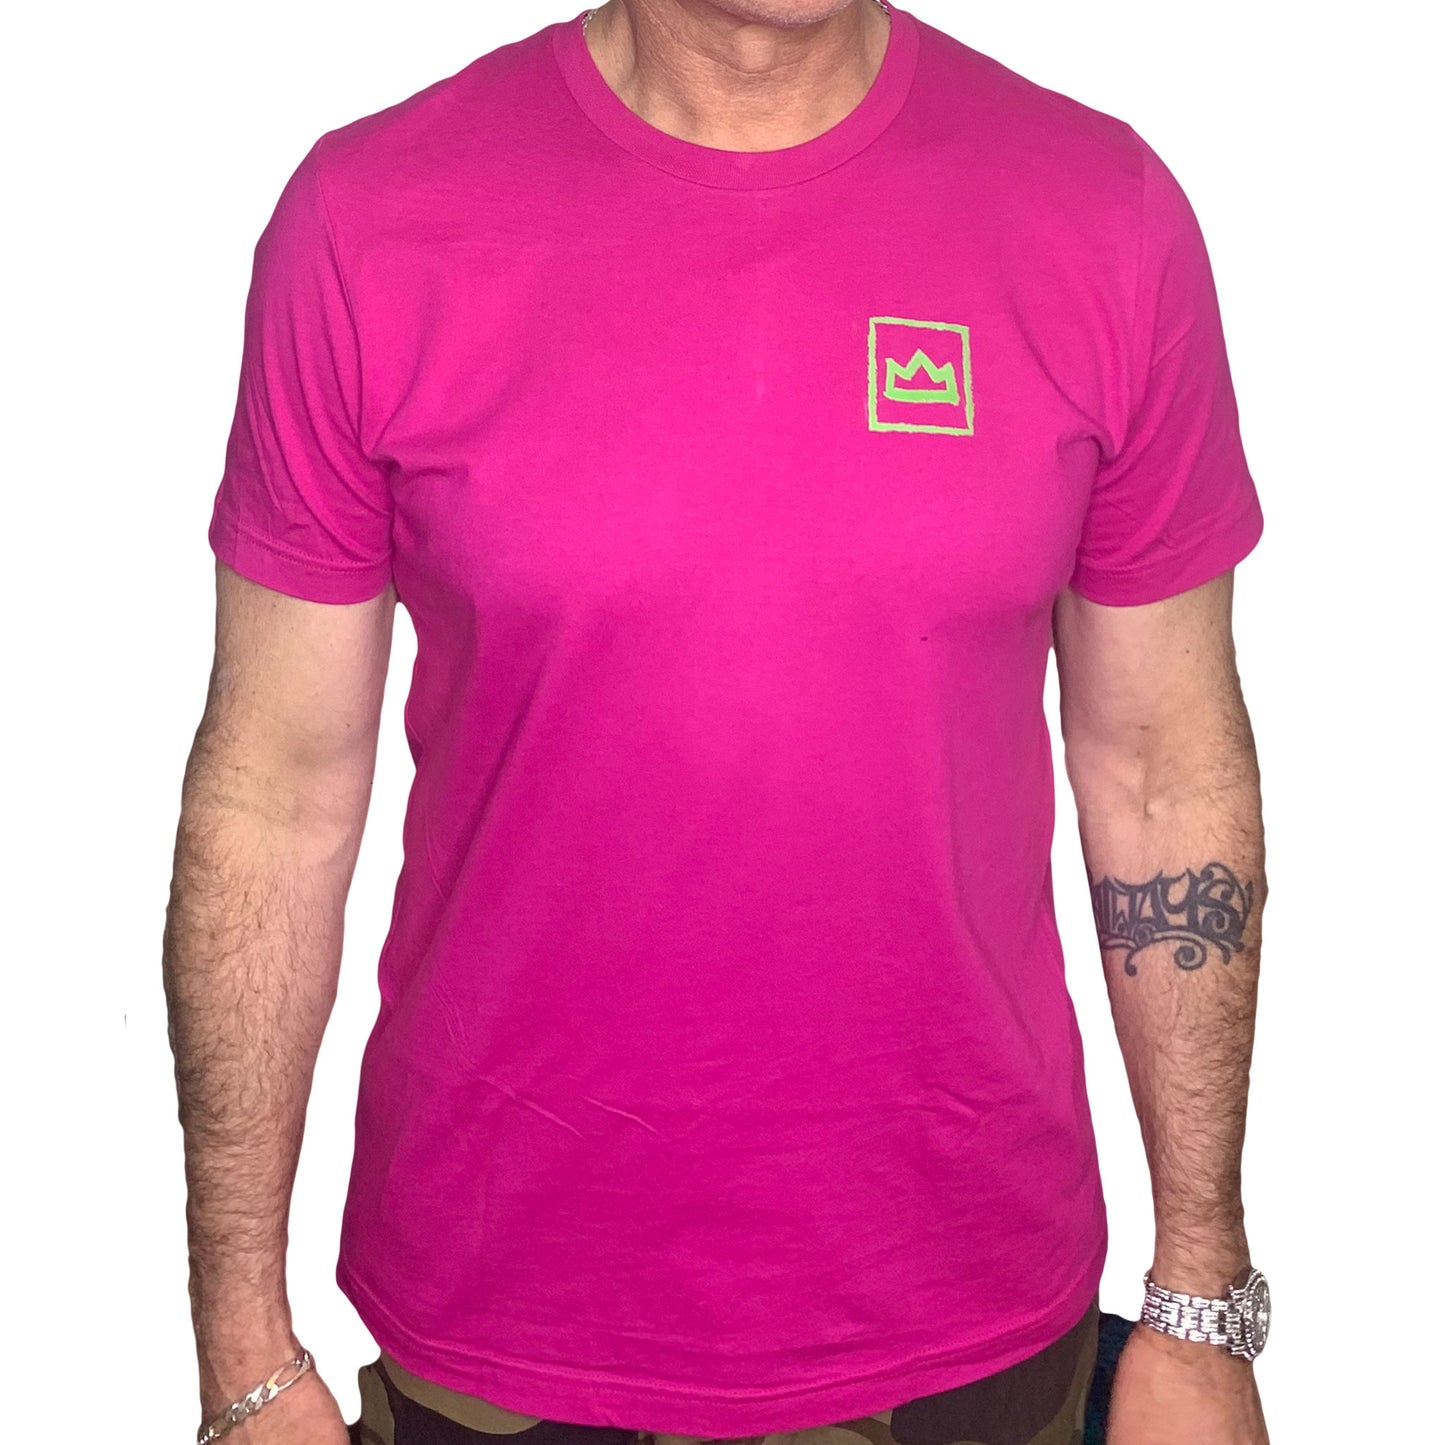 SIDEWALK TALK '85 (7 of 50) Size Large Magenta T-shirt